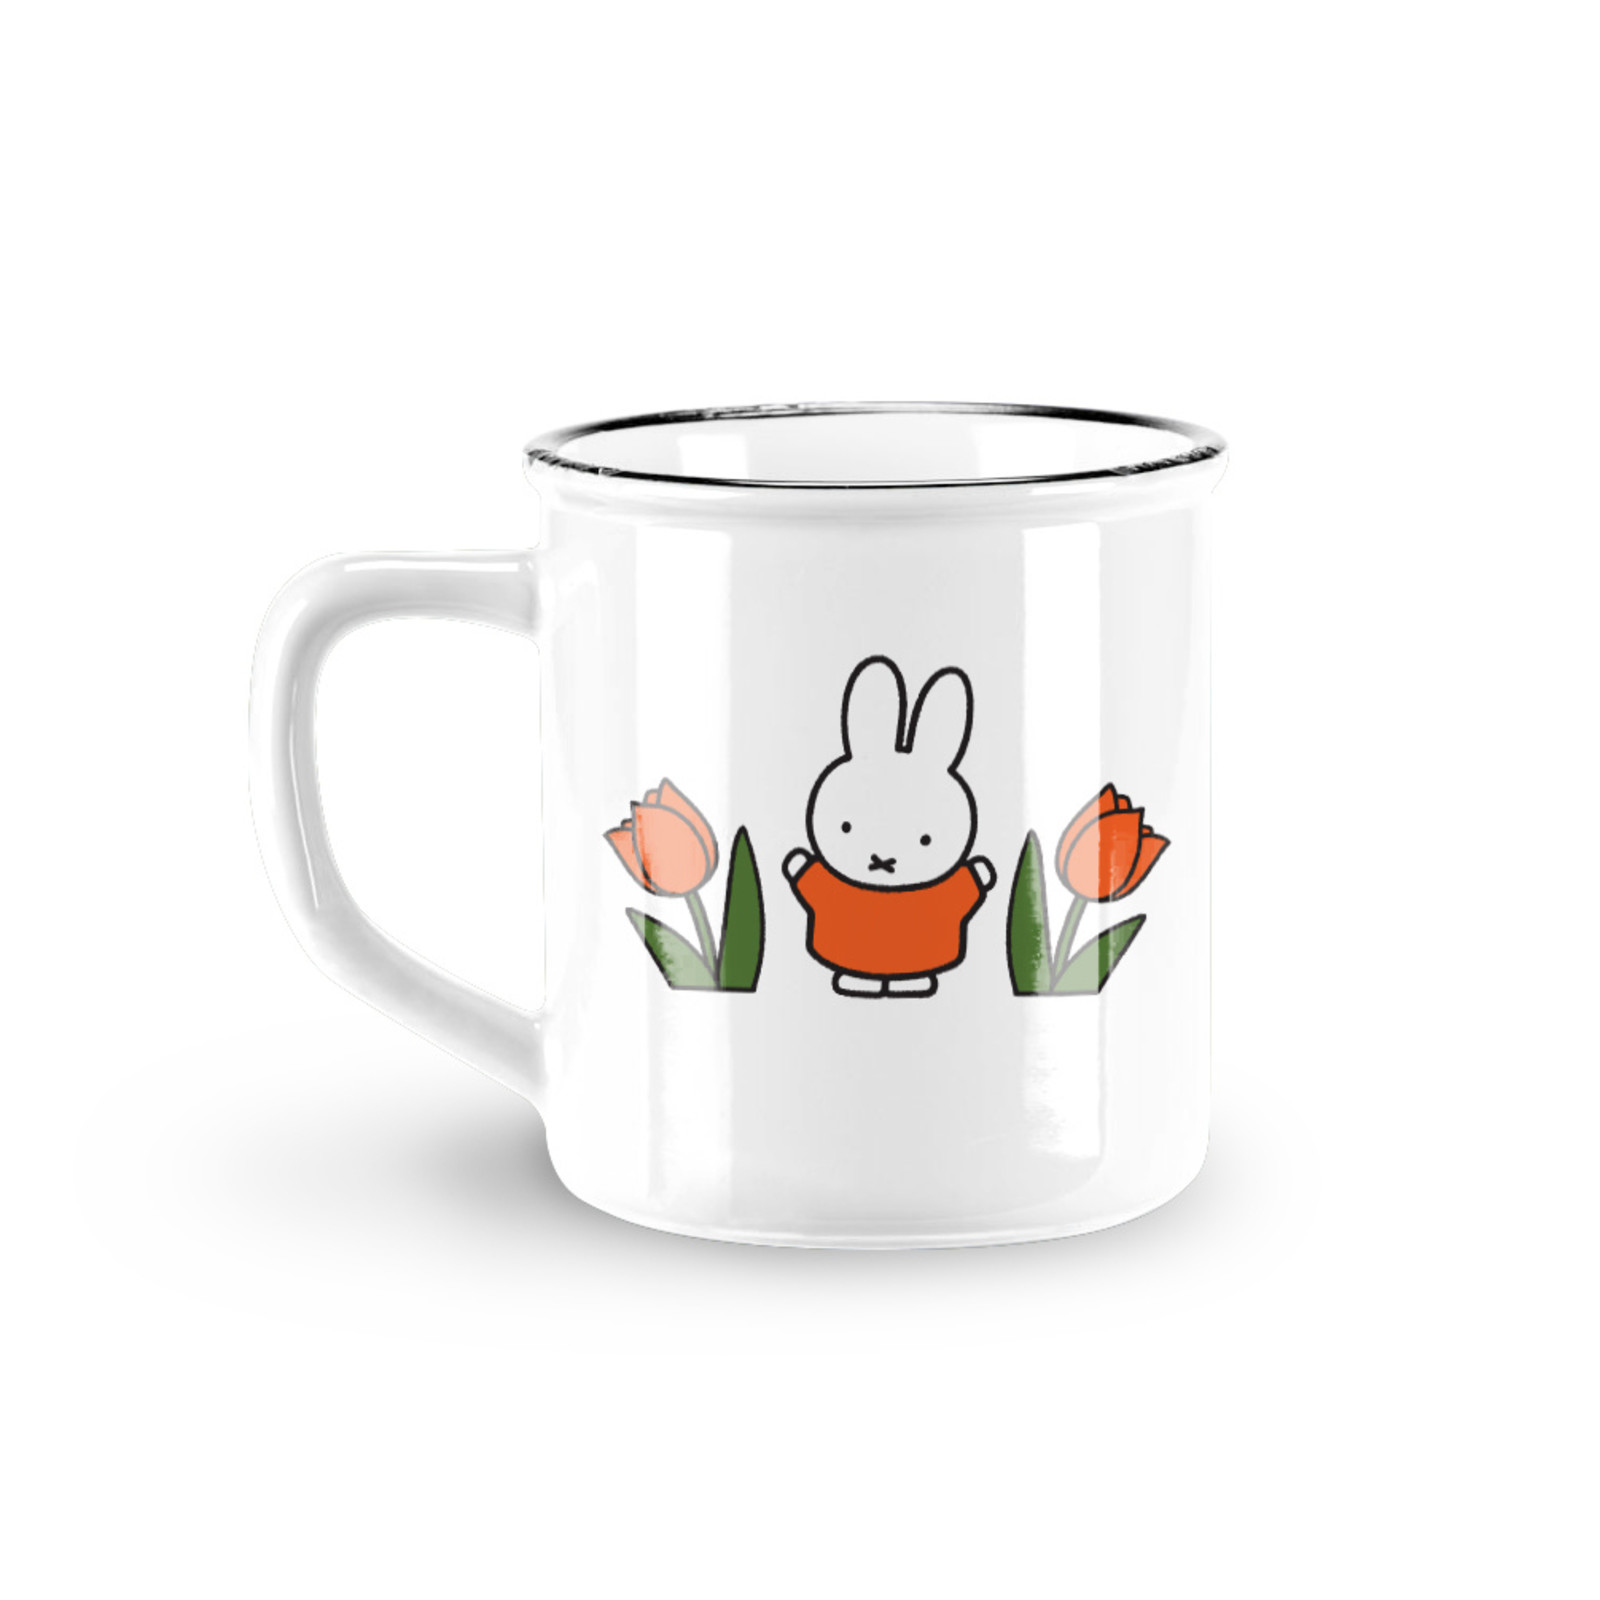 Ceramic mug retro miffy tulips holland red